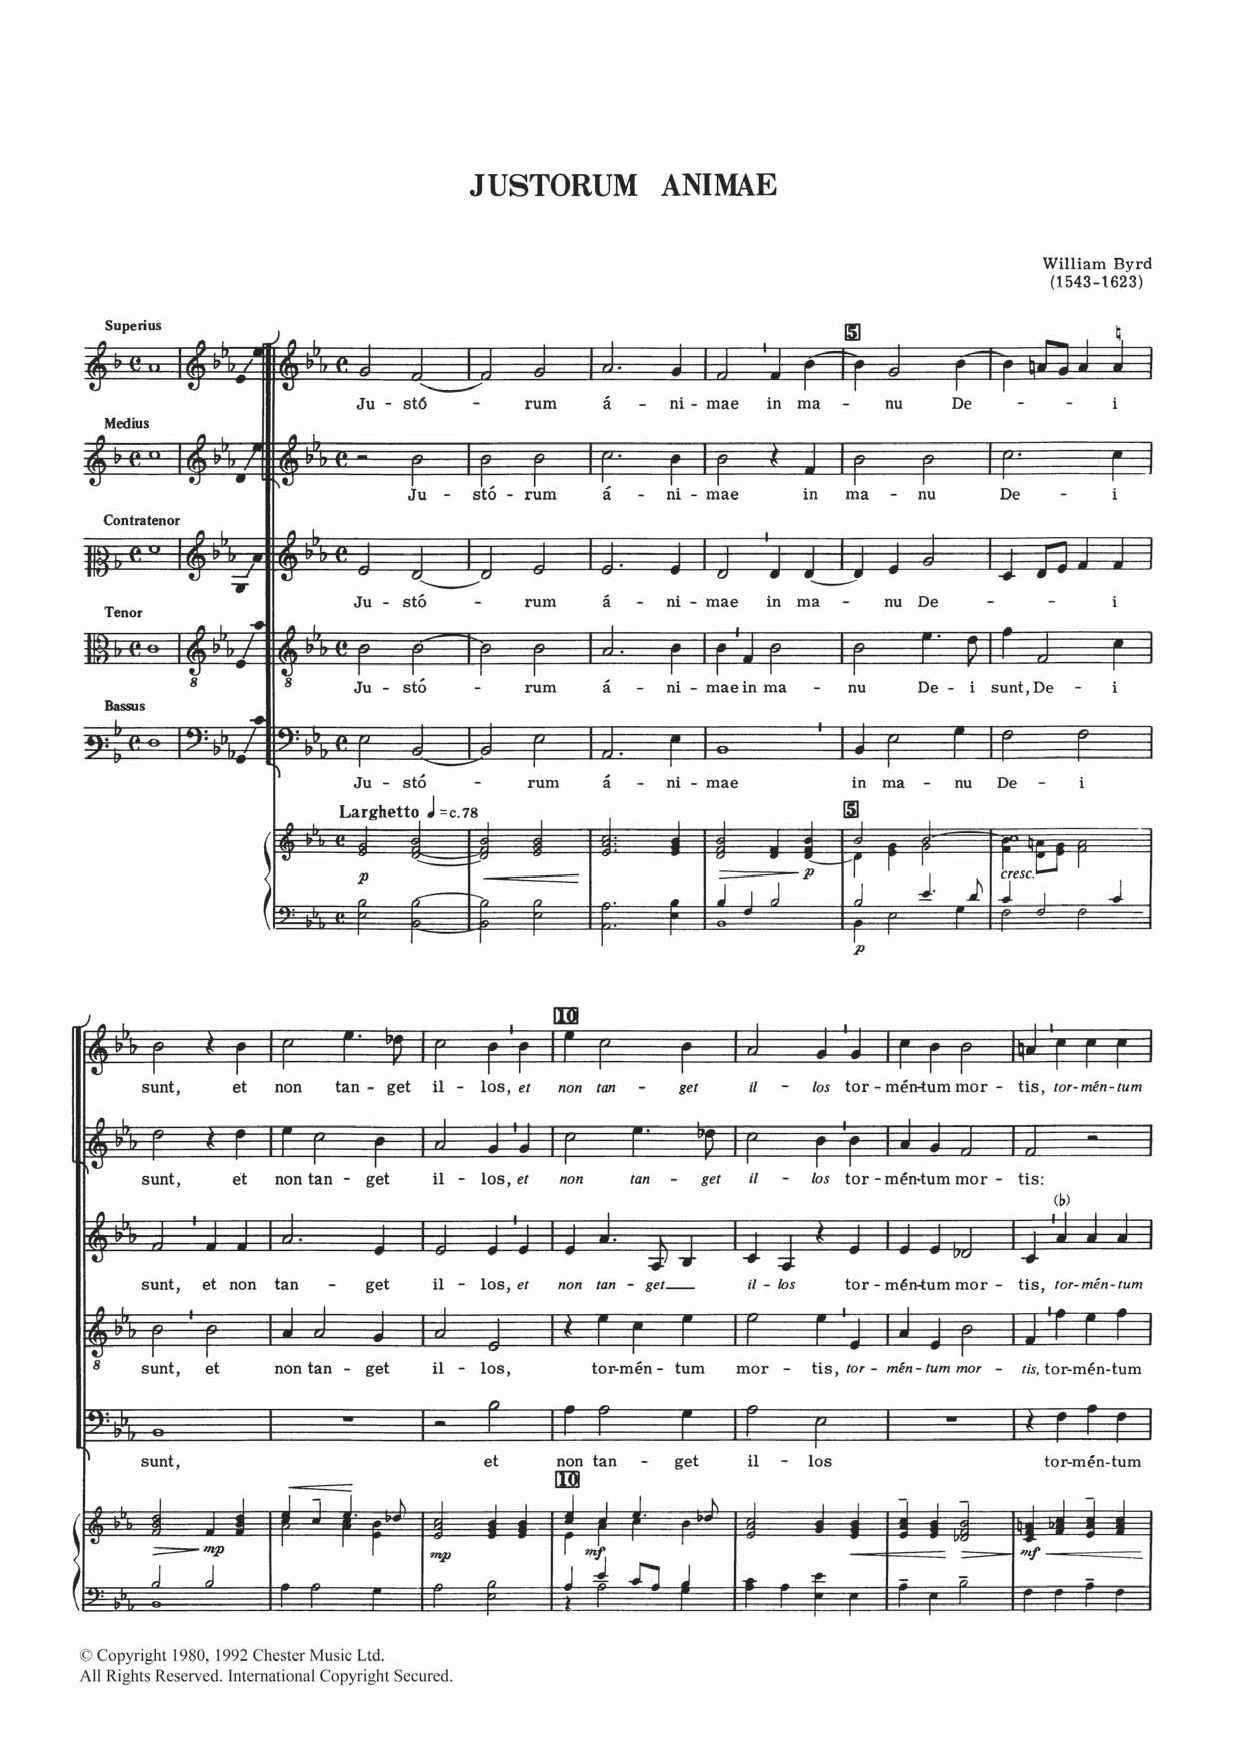 Download William Byrd Justorum Animae Sheet Music